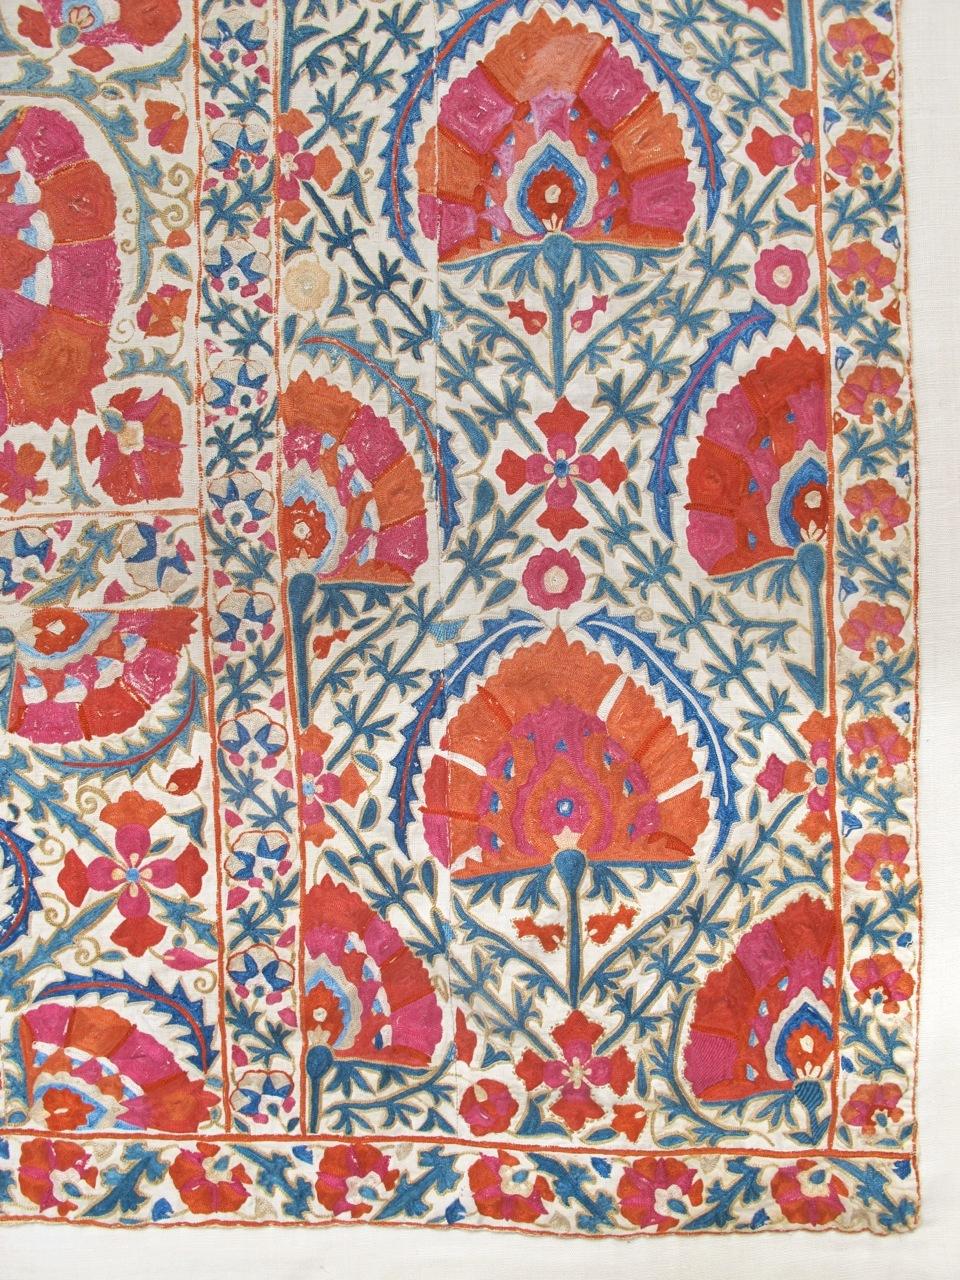 Antique Uzbek Kermina Suzani Textile, c. 1800

Additional Information:
Dimensions: 6'0